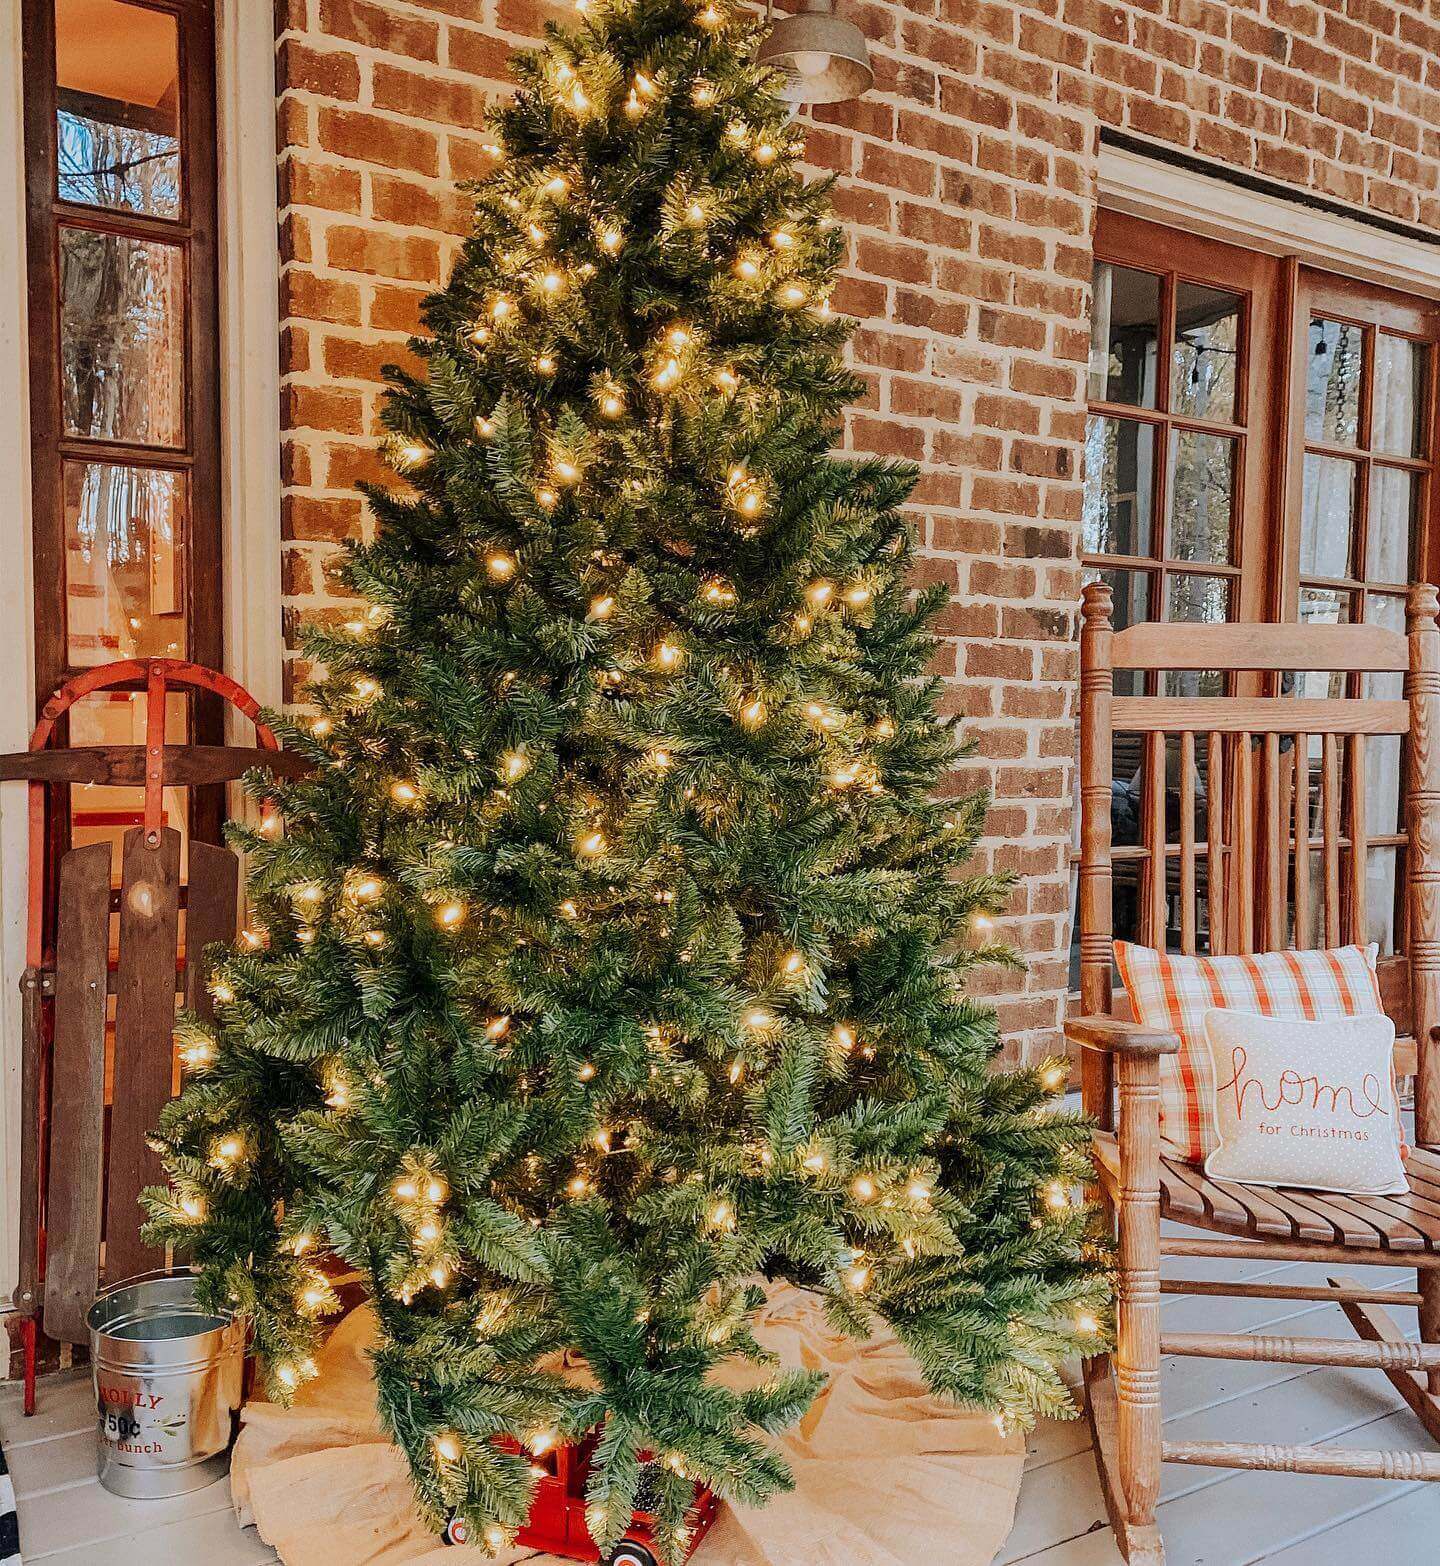 King of Christmas 9' Hancock Spruce Artificial Christmas Tree Unlit. Final Sale.